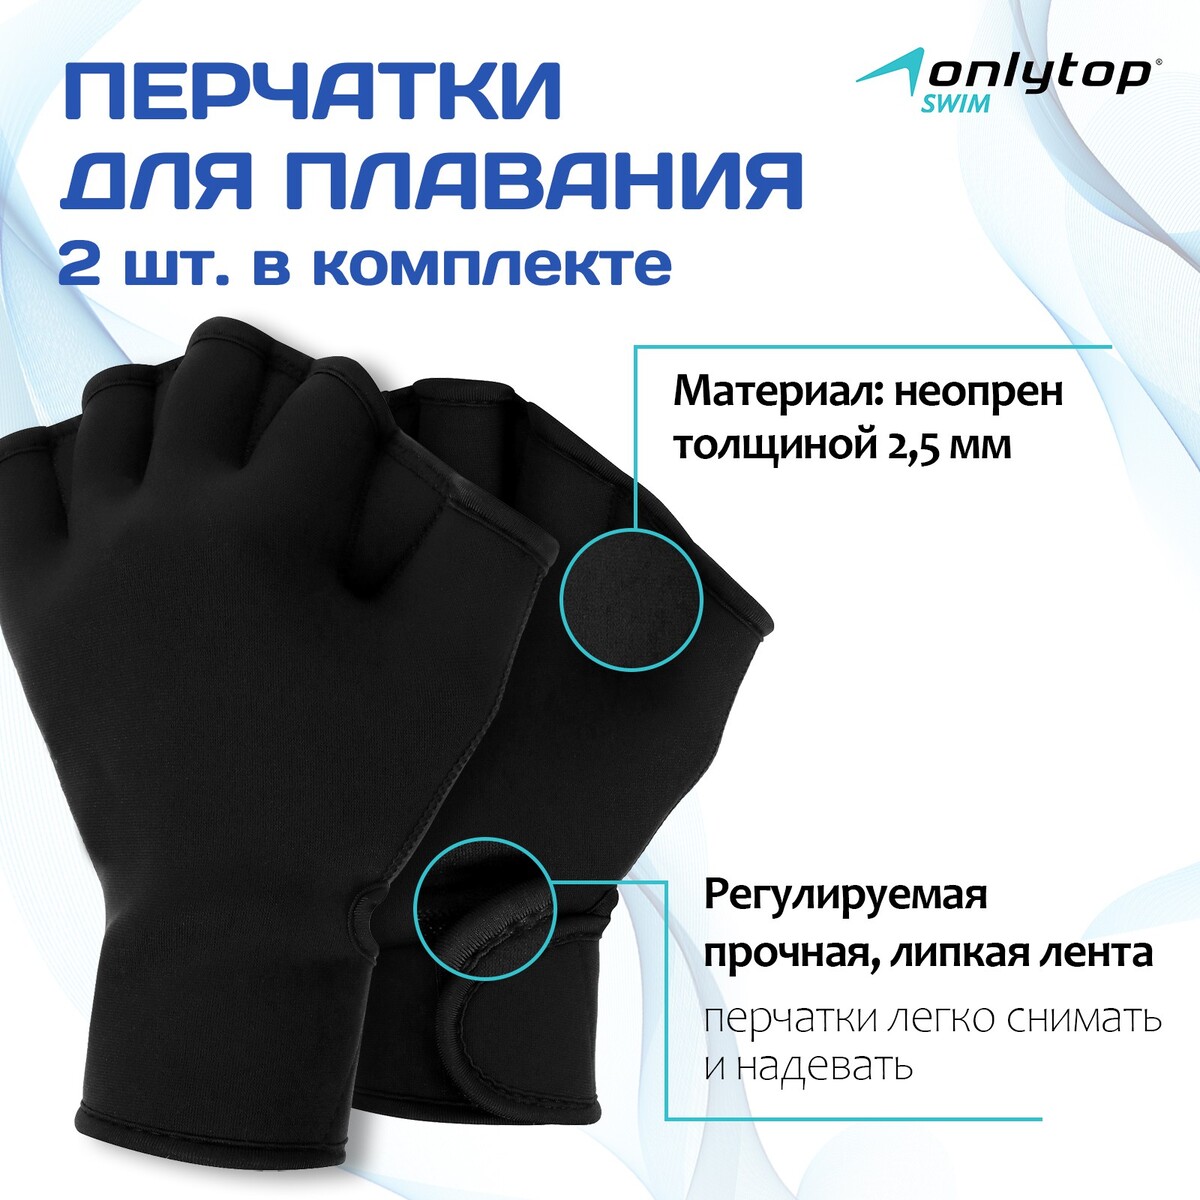 Перчатки для плавания onlytop, неопрен, 2.5 мм, р. l, цвет черный перчатки для плавания onlytop неопрен 2 5 мм р m